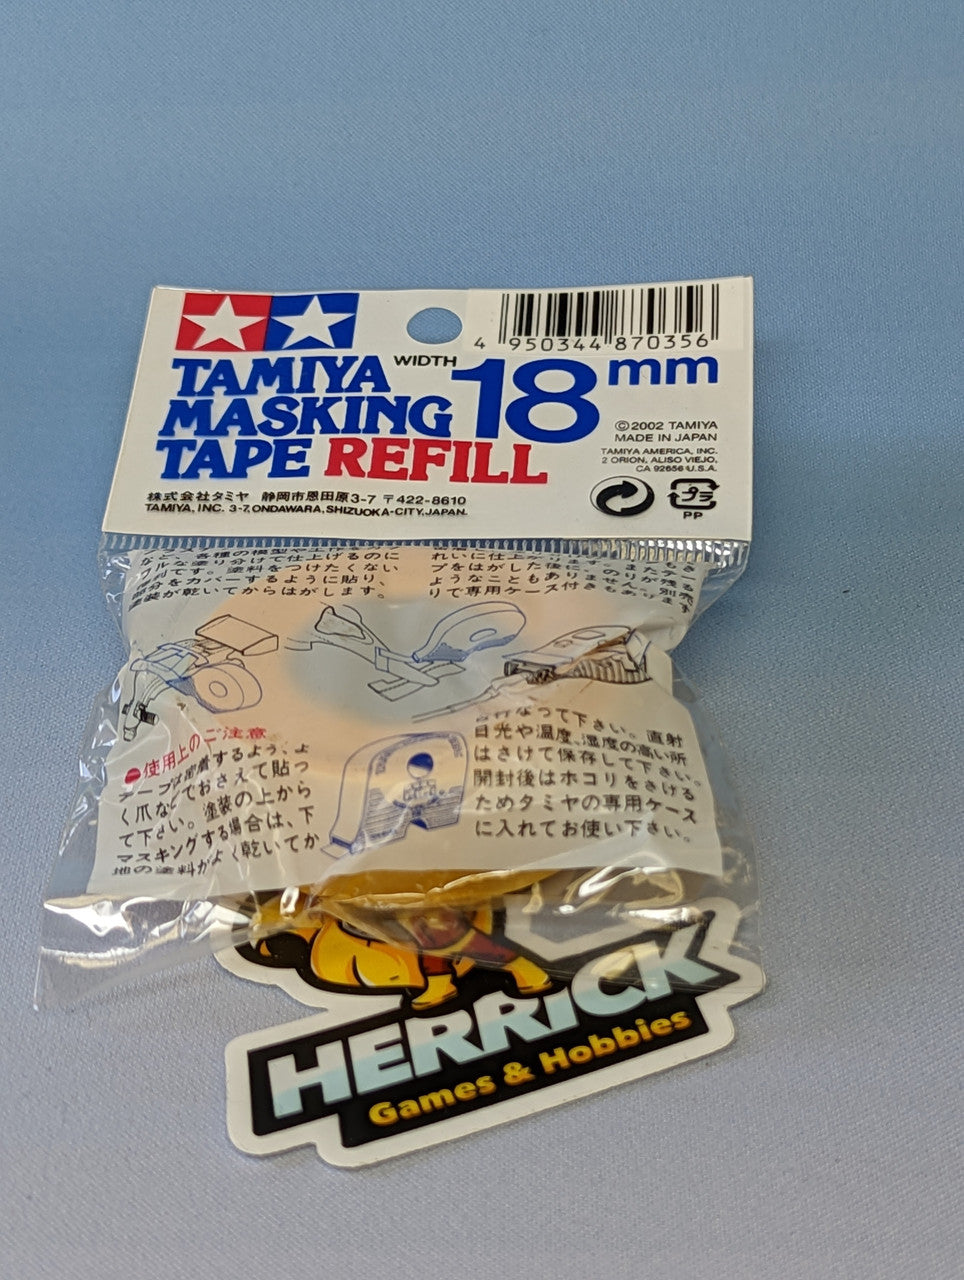 Tamiya: Masking Tape Refill 18mm